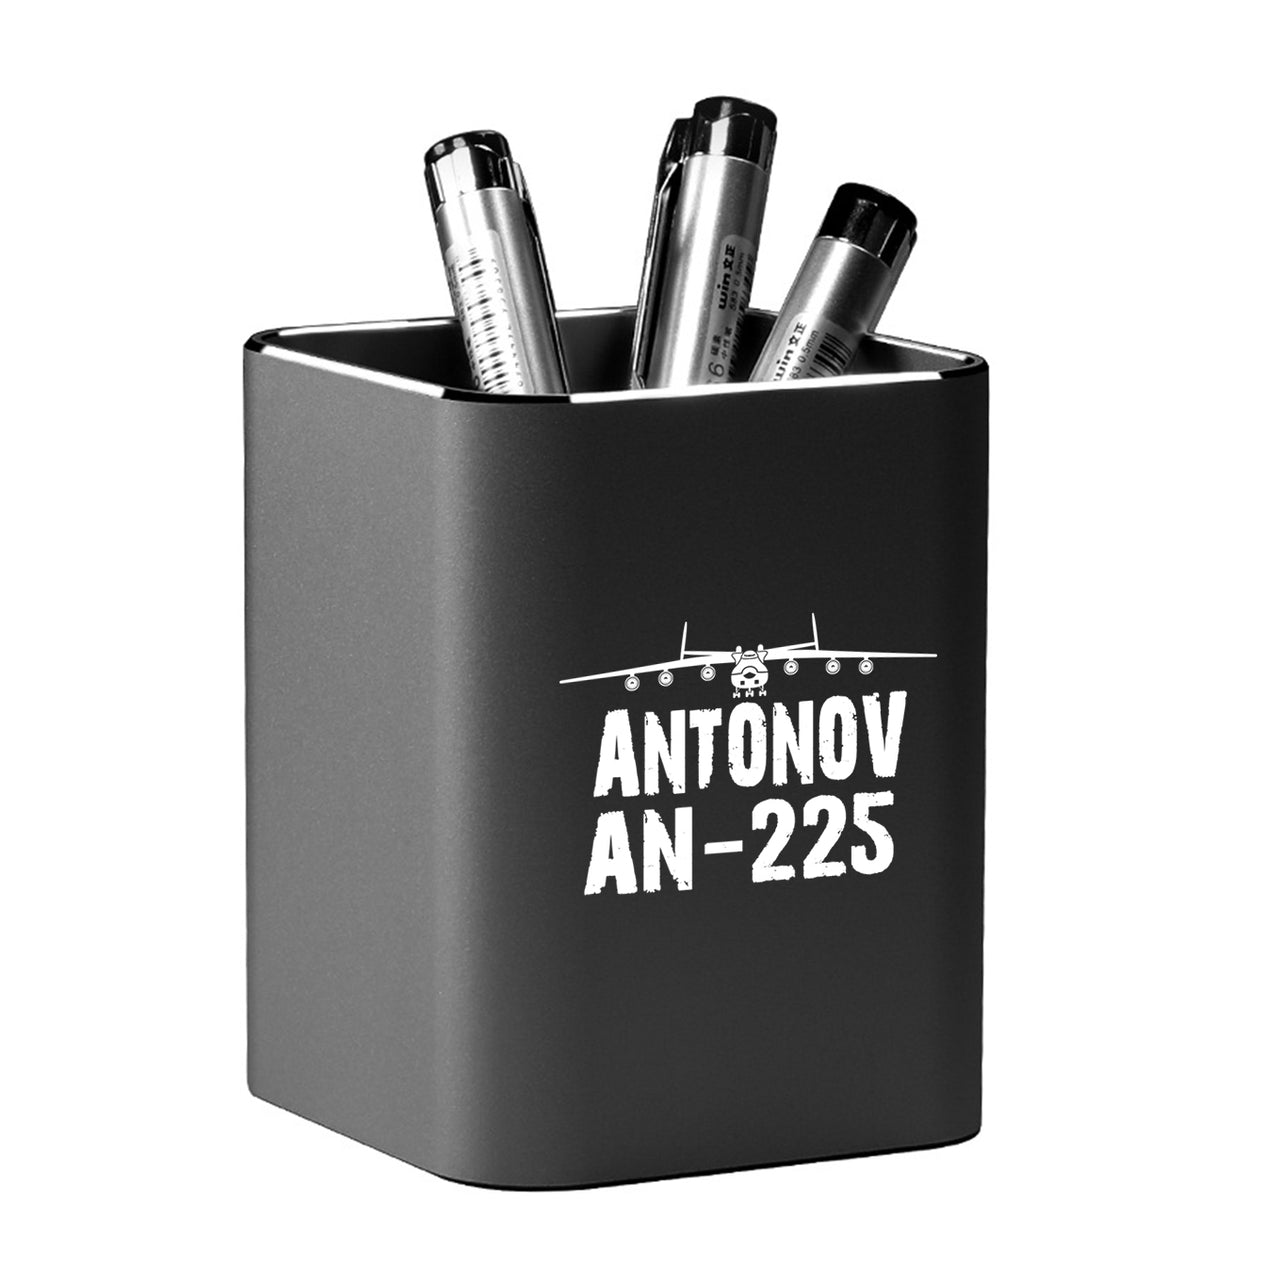 Antonov AN-225 & Plane Designed Aluminium Alloy Pen Holders